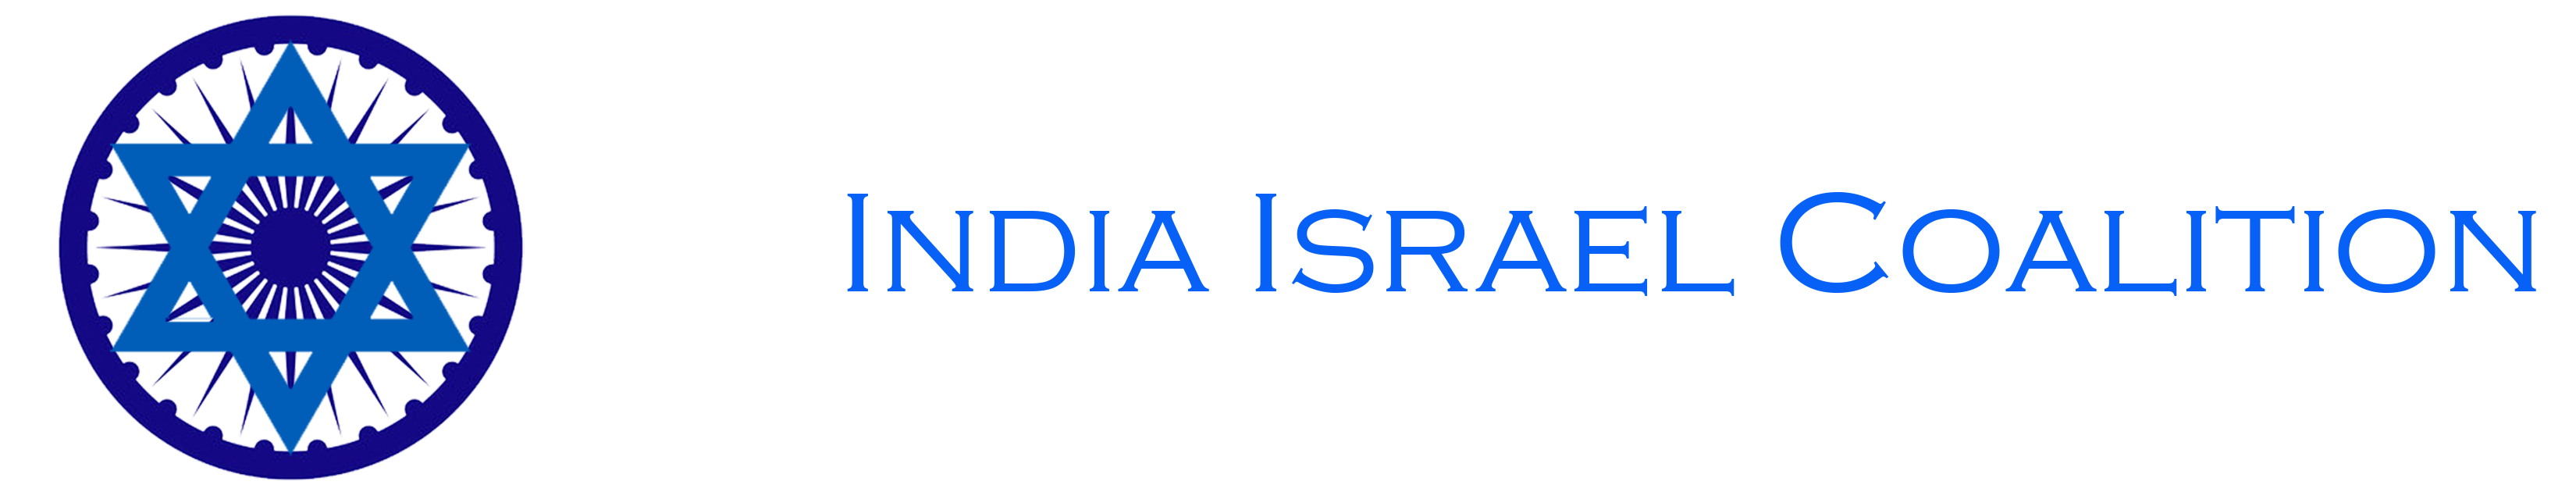 India Israel Coalition